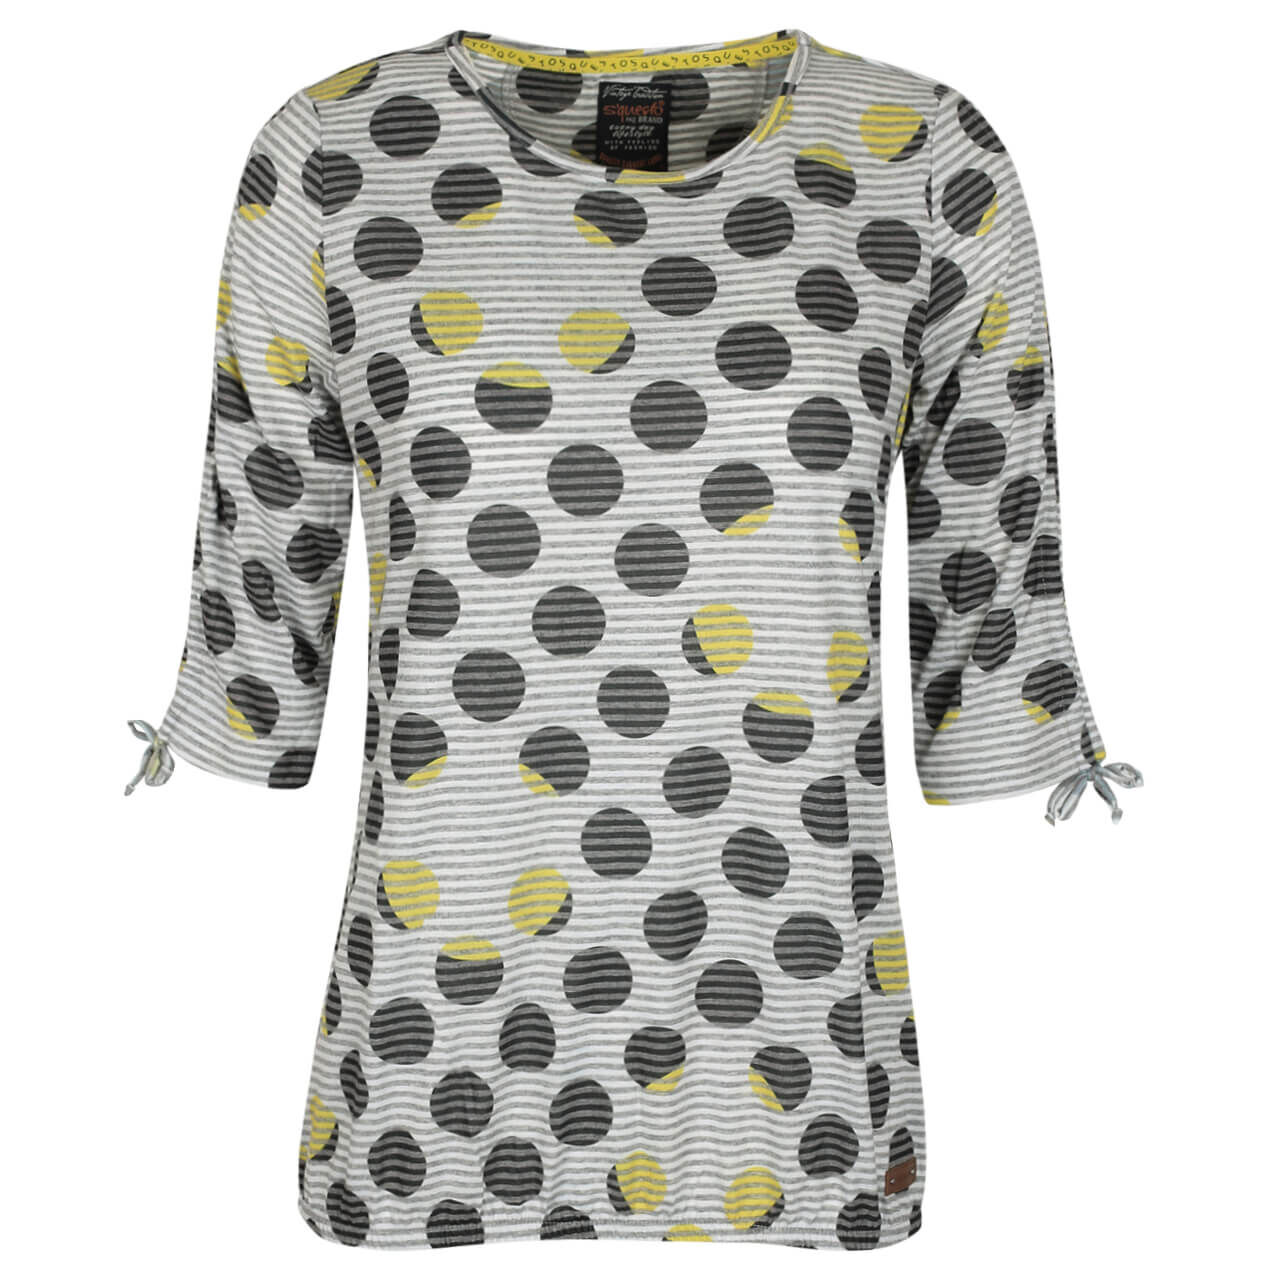 Soquesto 3/4 Arm Shirt für Damen in Grau mit Print, FarbNr.: 3500